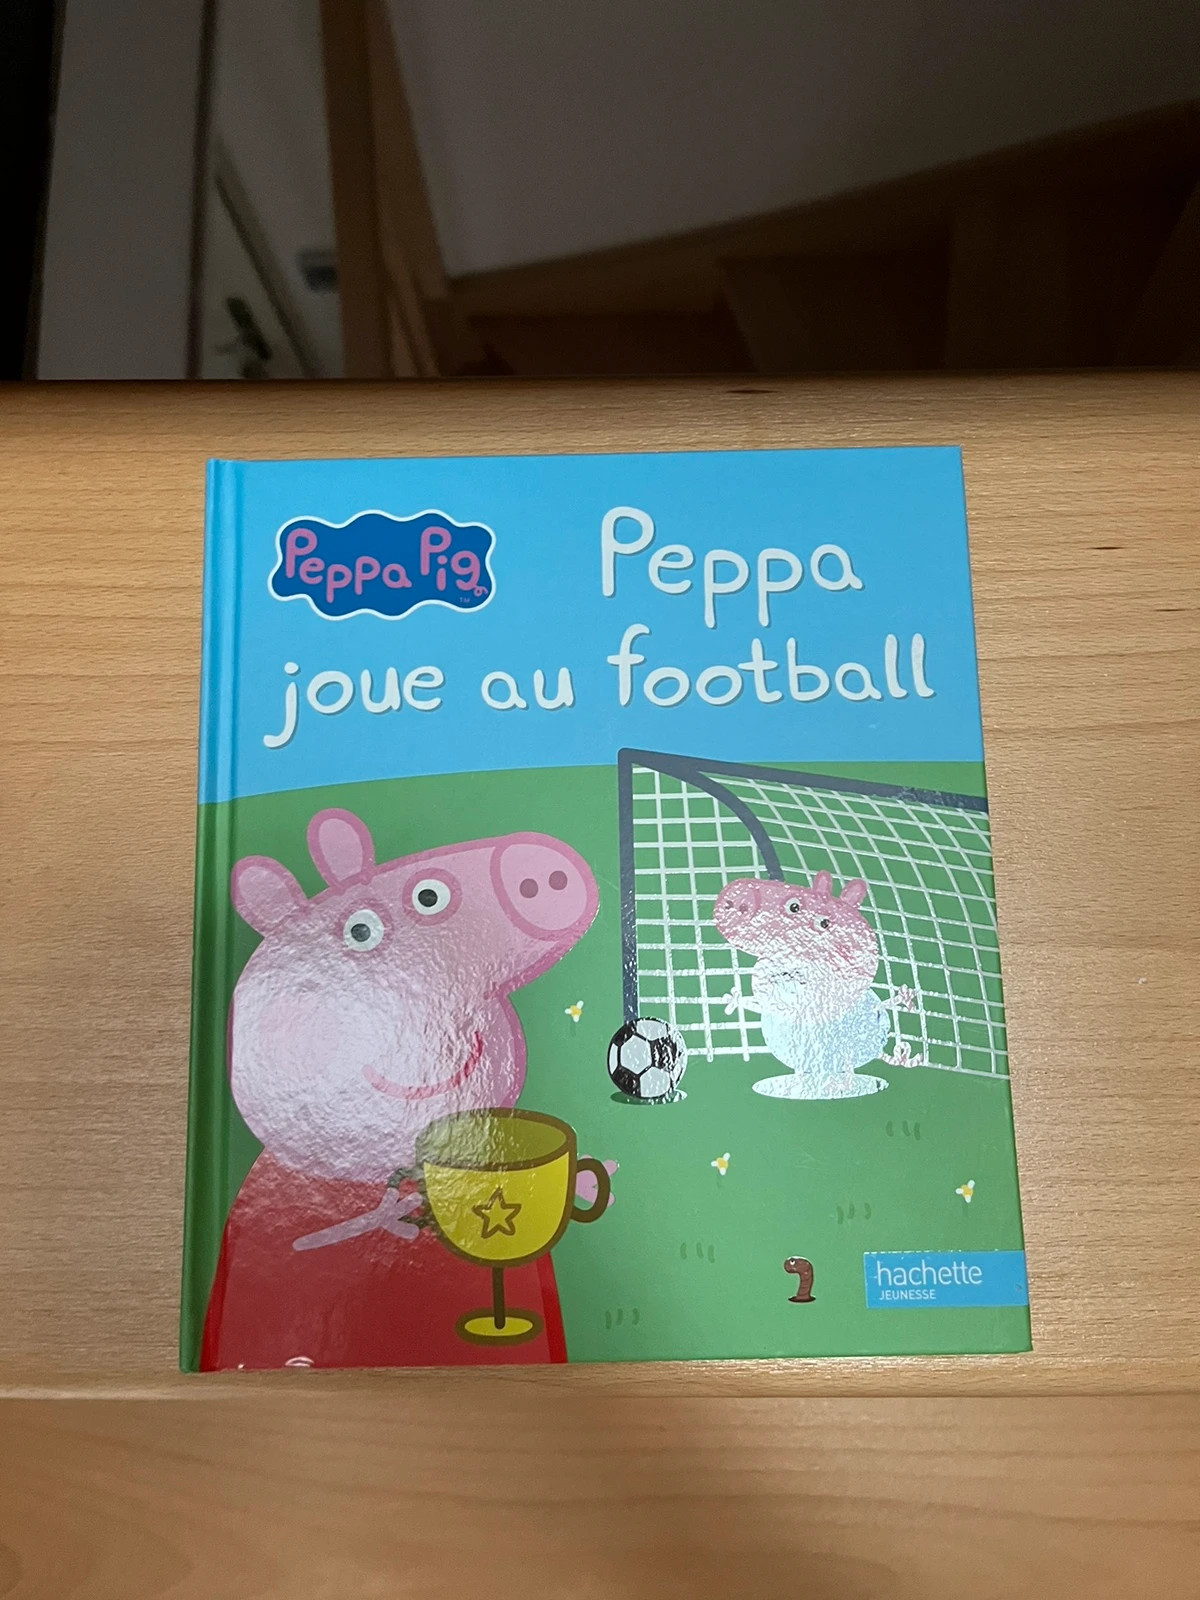 Peppa pig - peppa joue au football